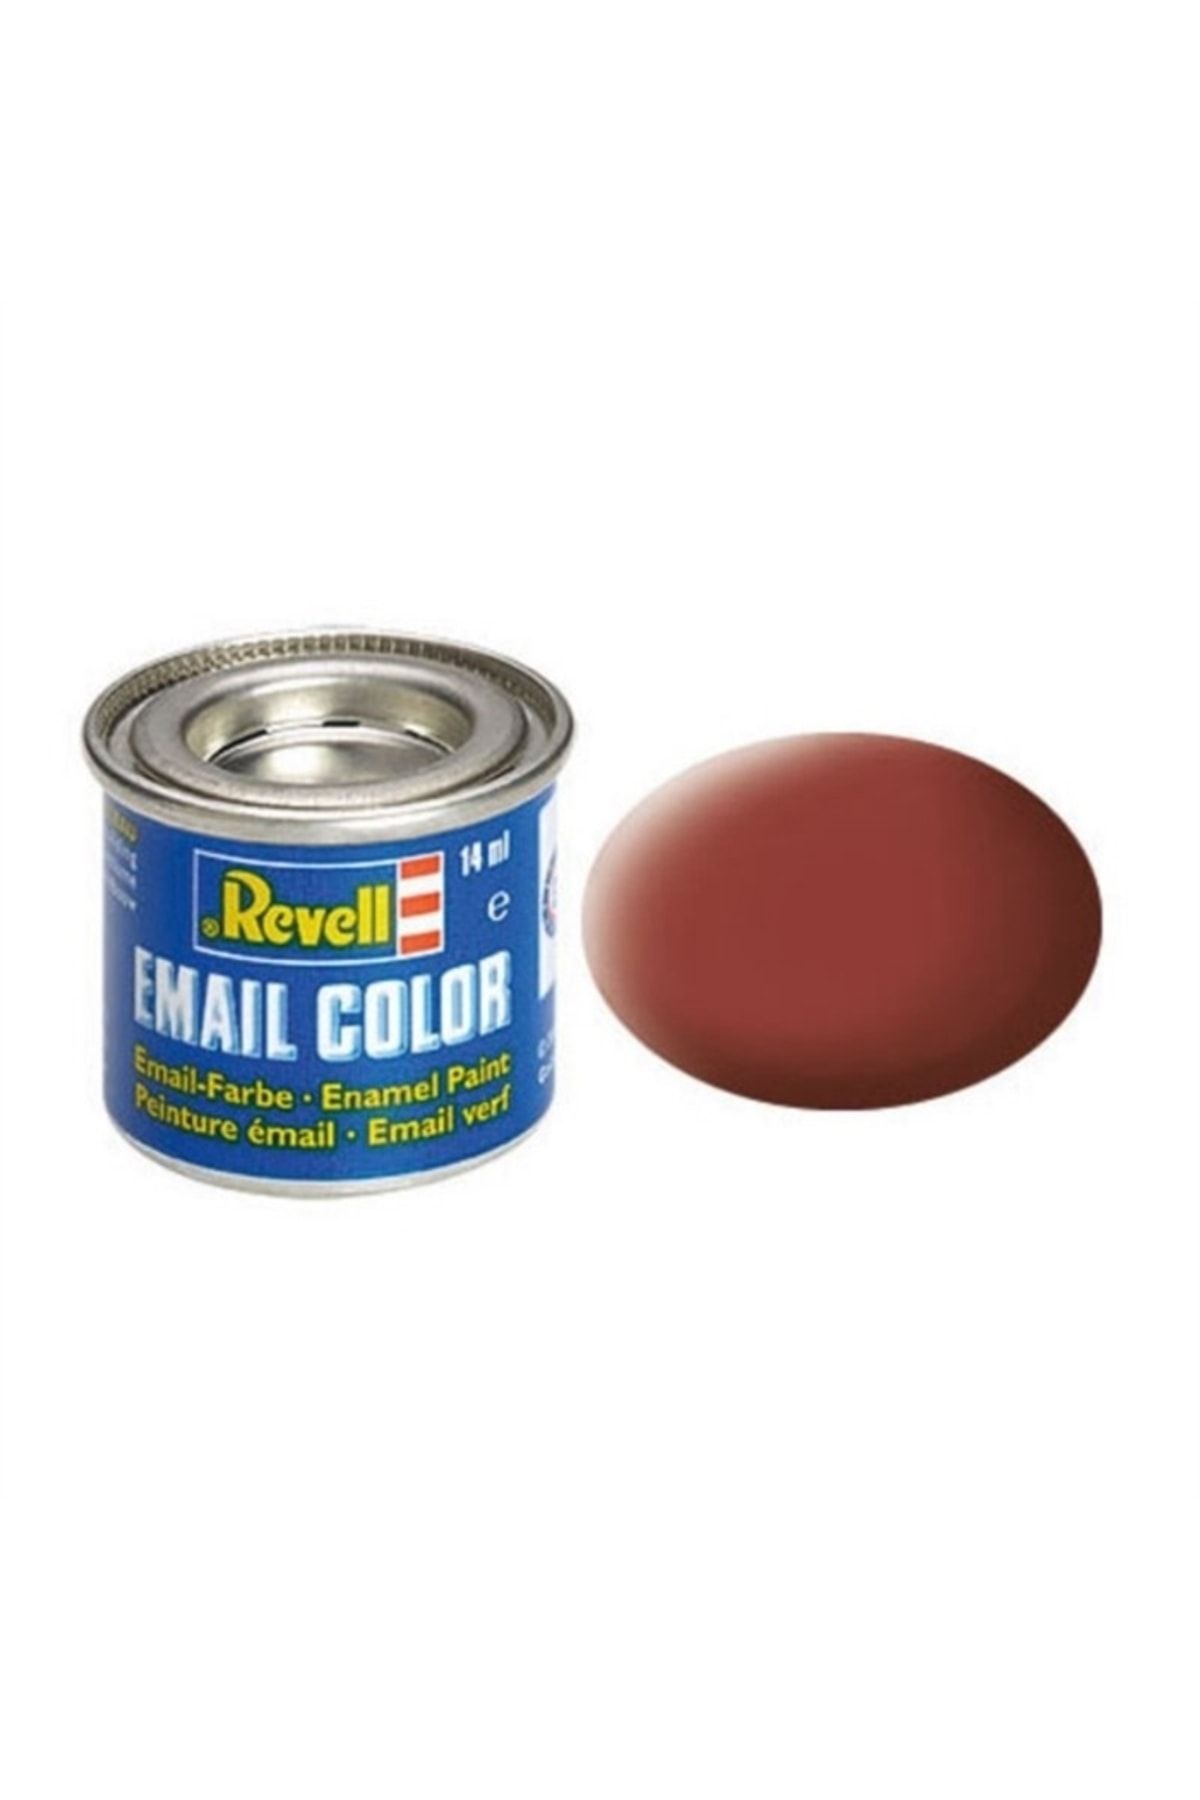 REVELL Maket Boyası Email Color Mat Kırmızımsı Kahve Rengi-32137